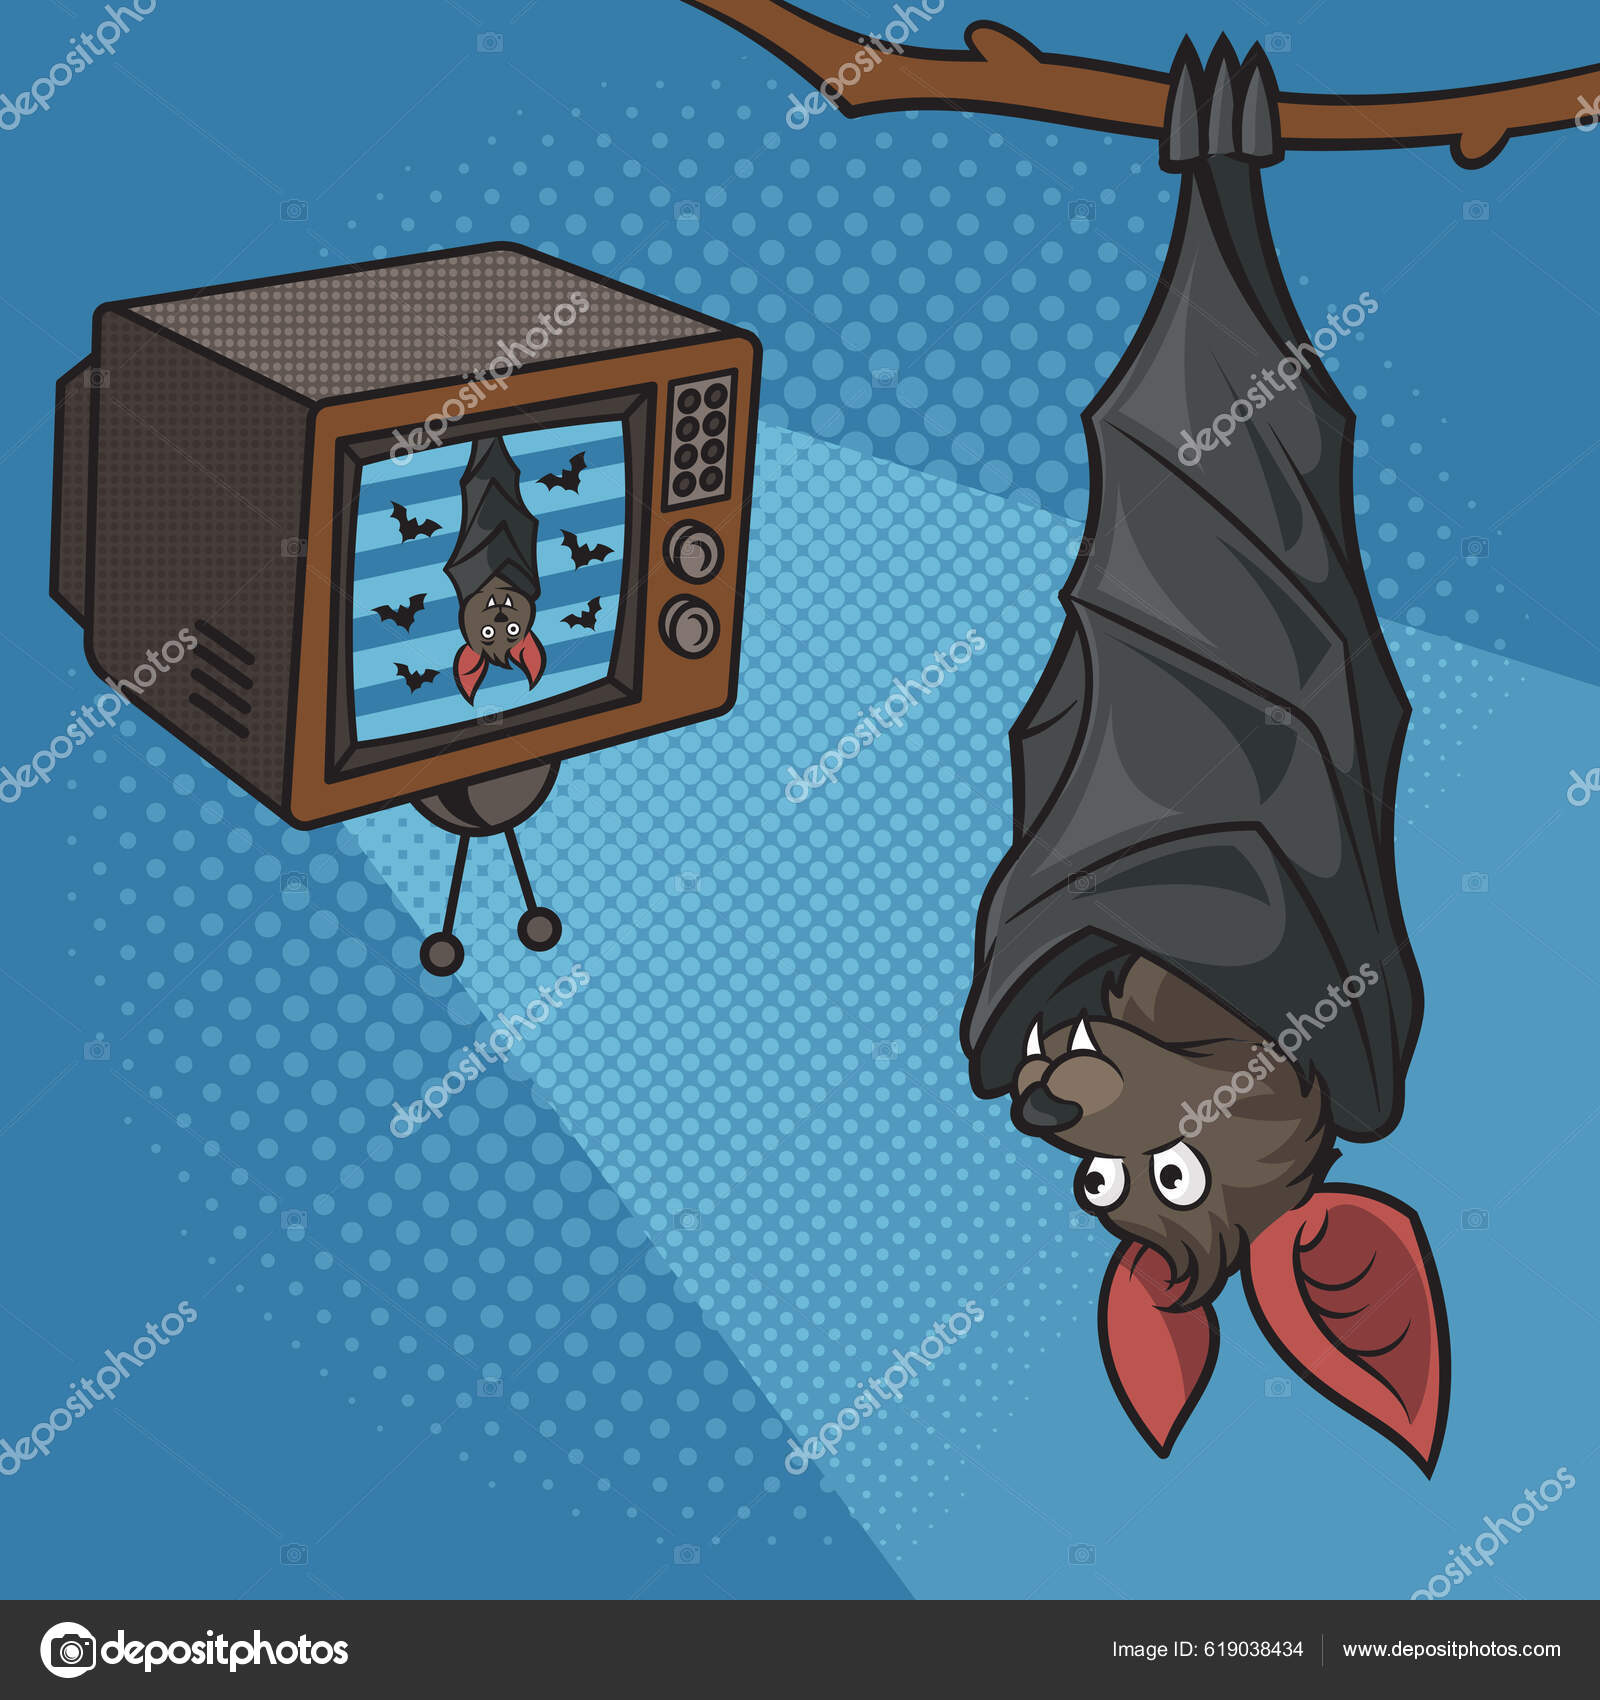 Upside down bat Vector Art Stock Images | Depositphotos